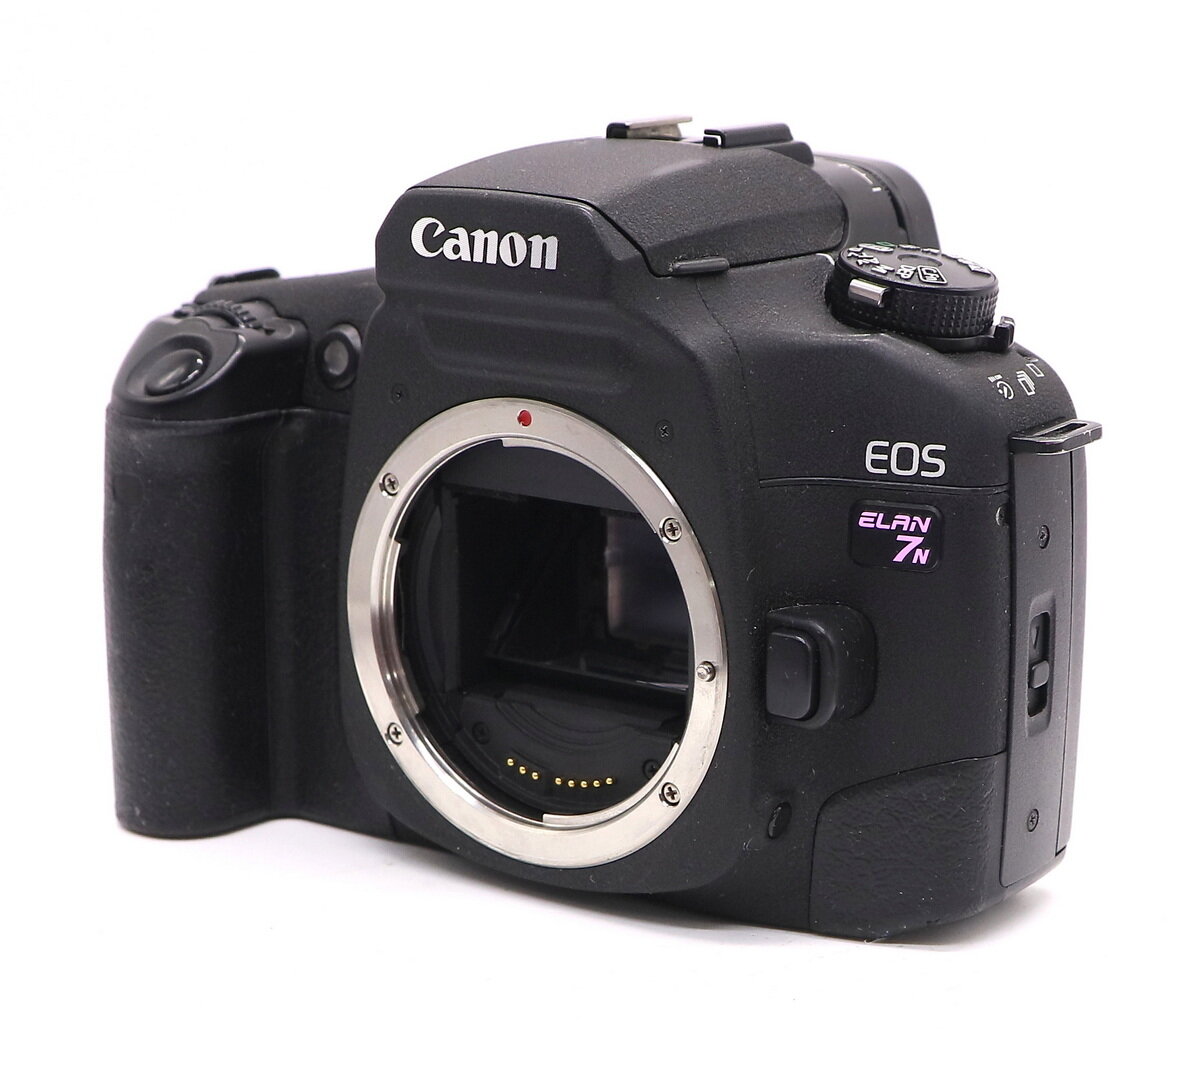 Canon EOS Elan 7N body